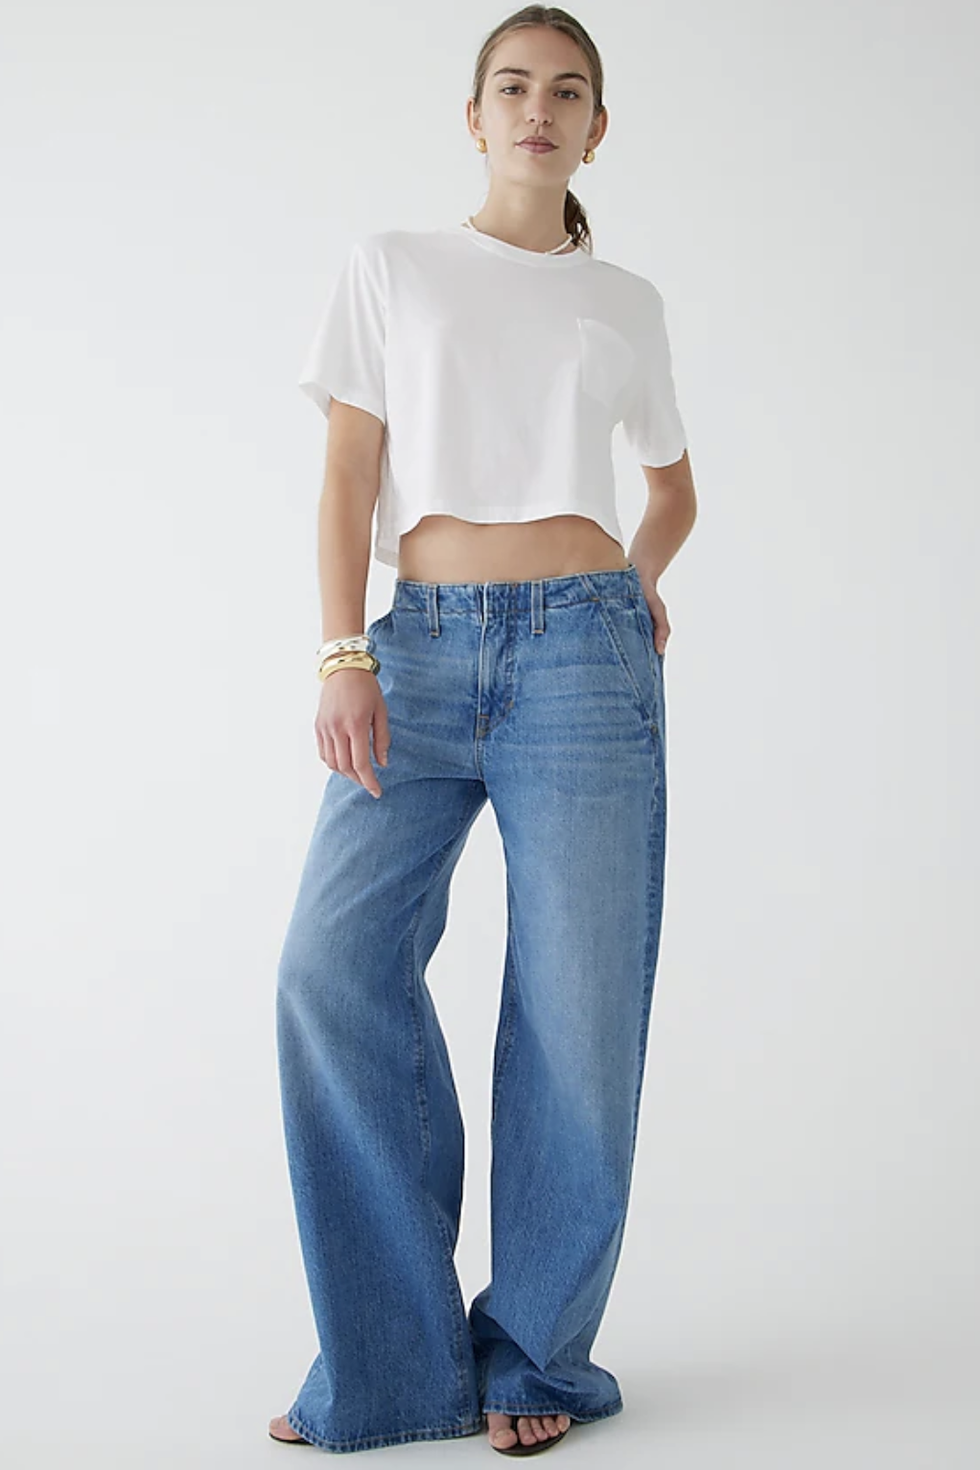 The 9 best wide-leg jeans to buy in Australia.